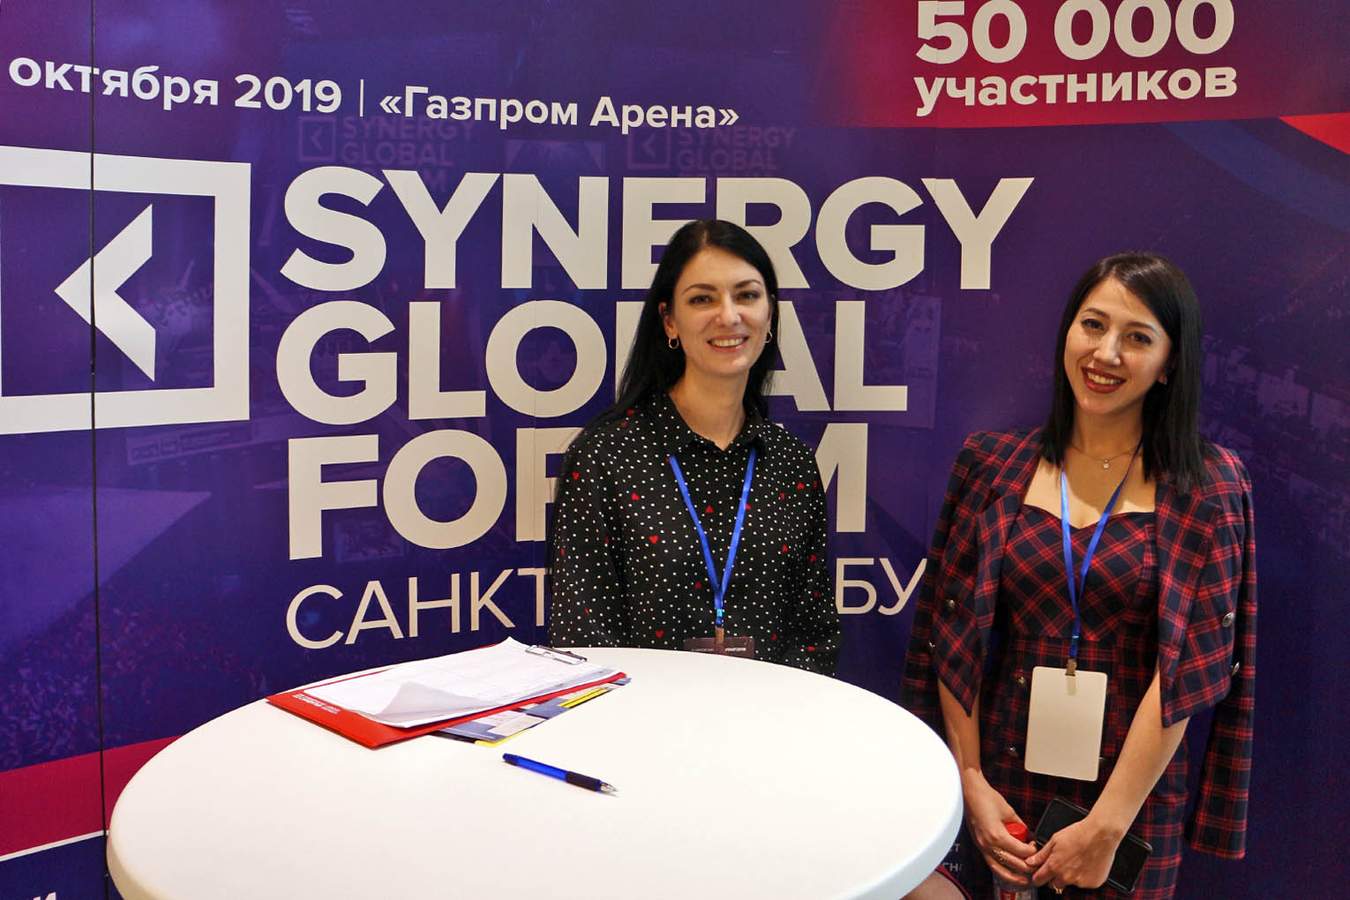 Synergy Woman Forum 2019